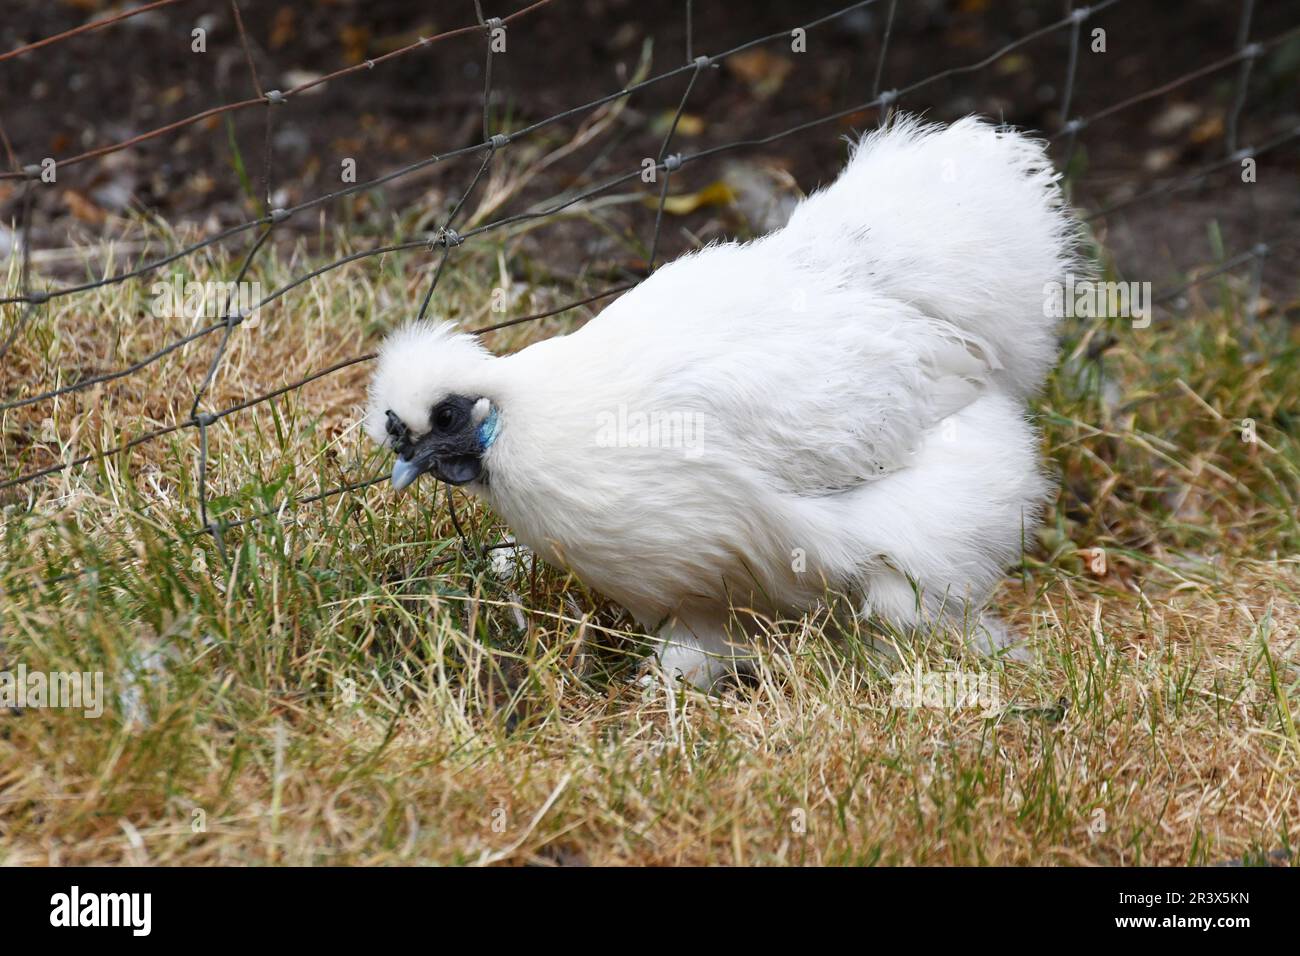 White Silky Chicken at Baylham House Rare Breeds Farm, Suffolk, UK Stock Photo